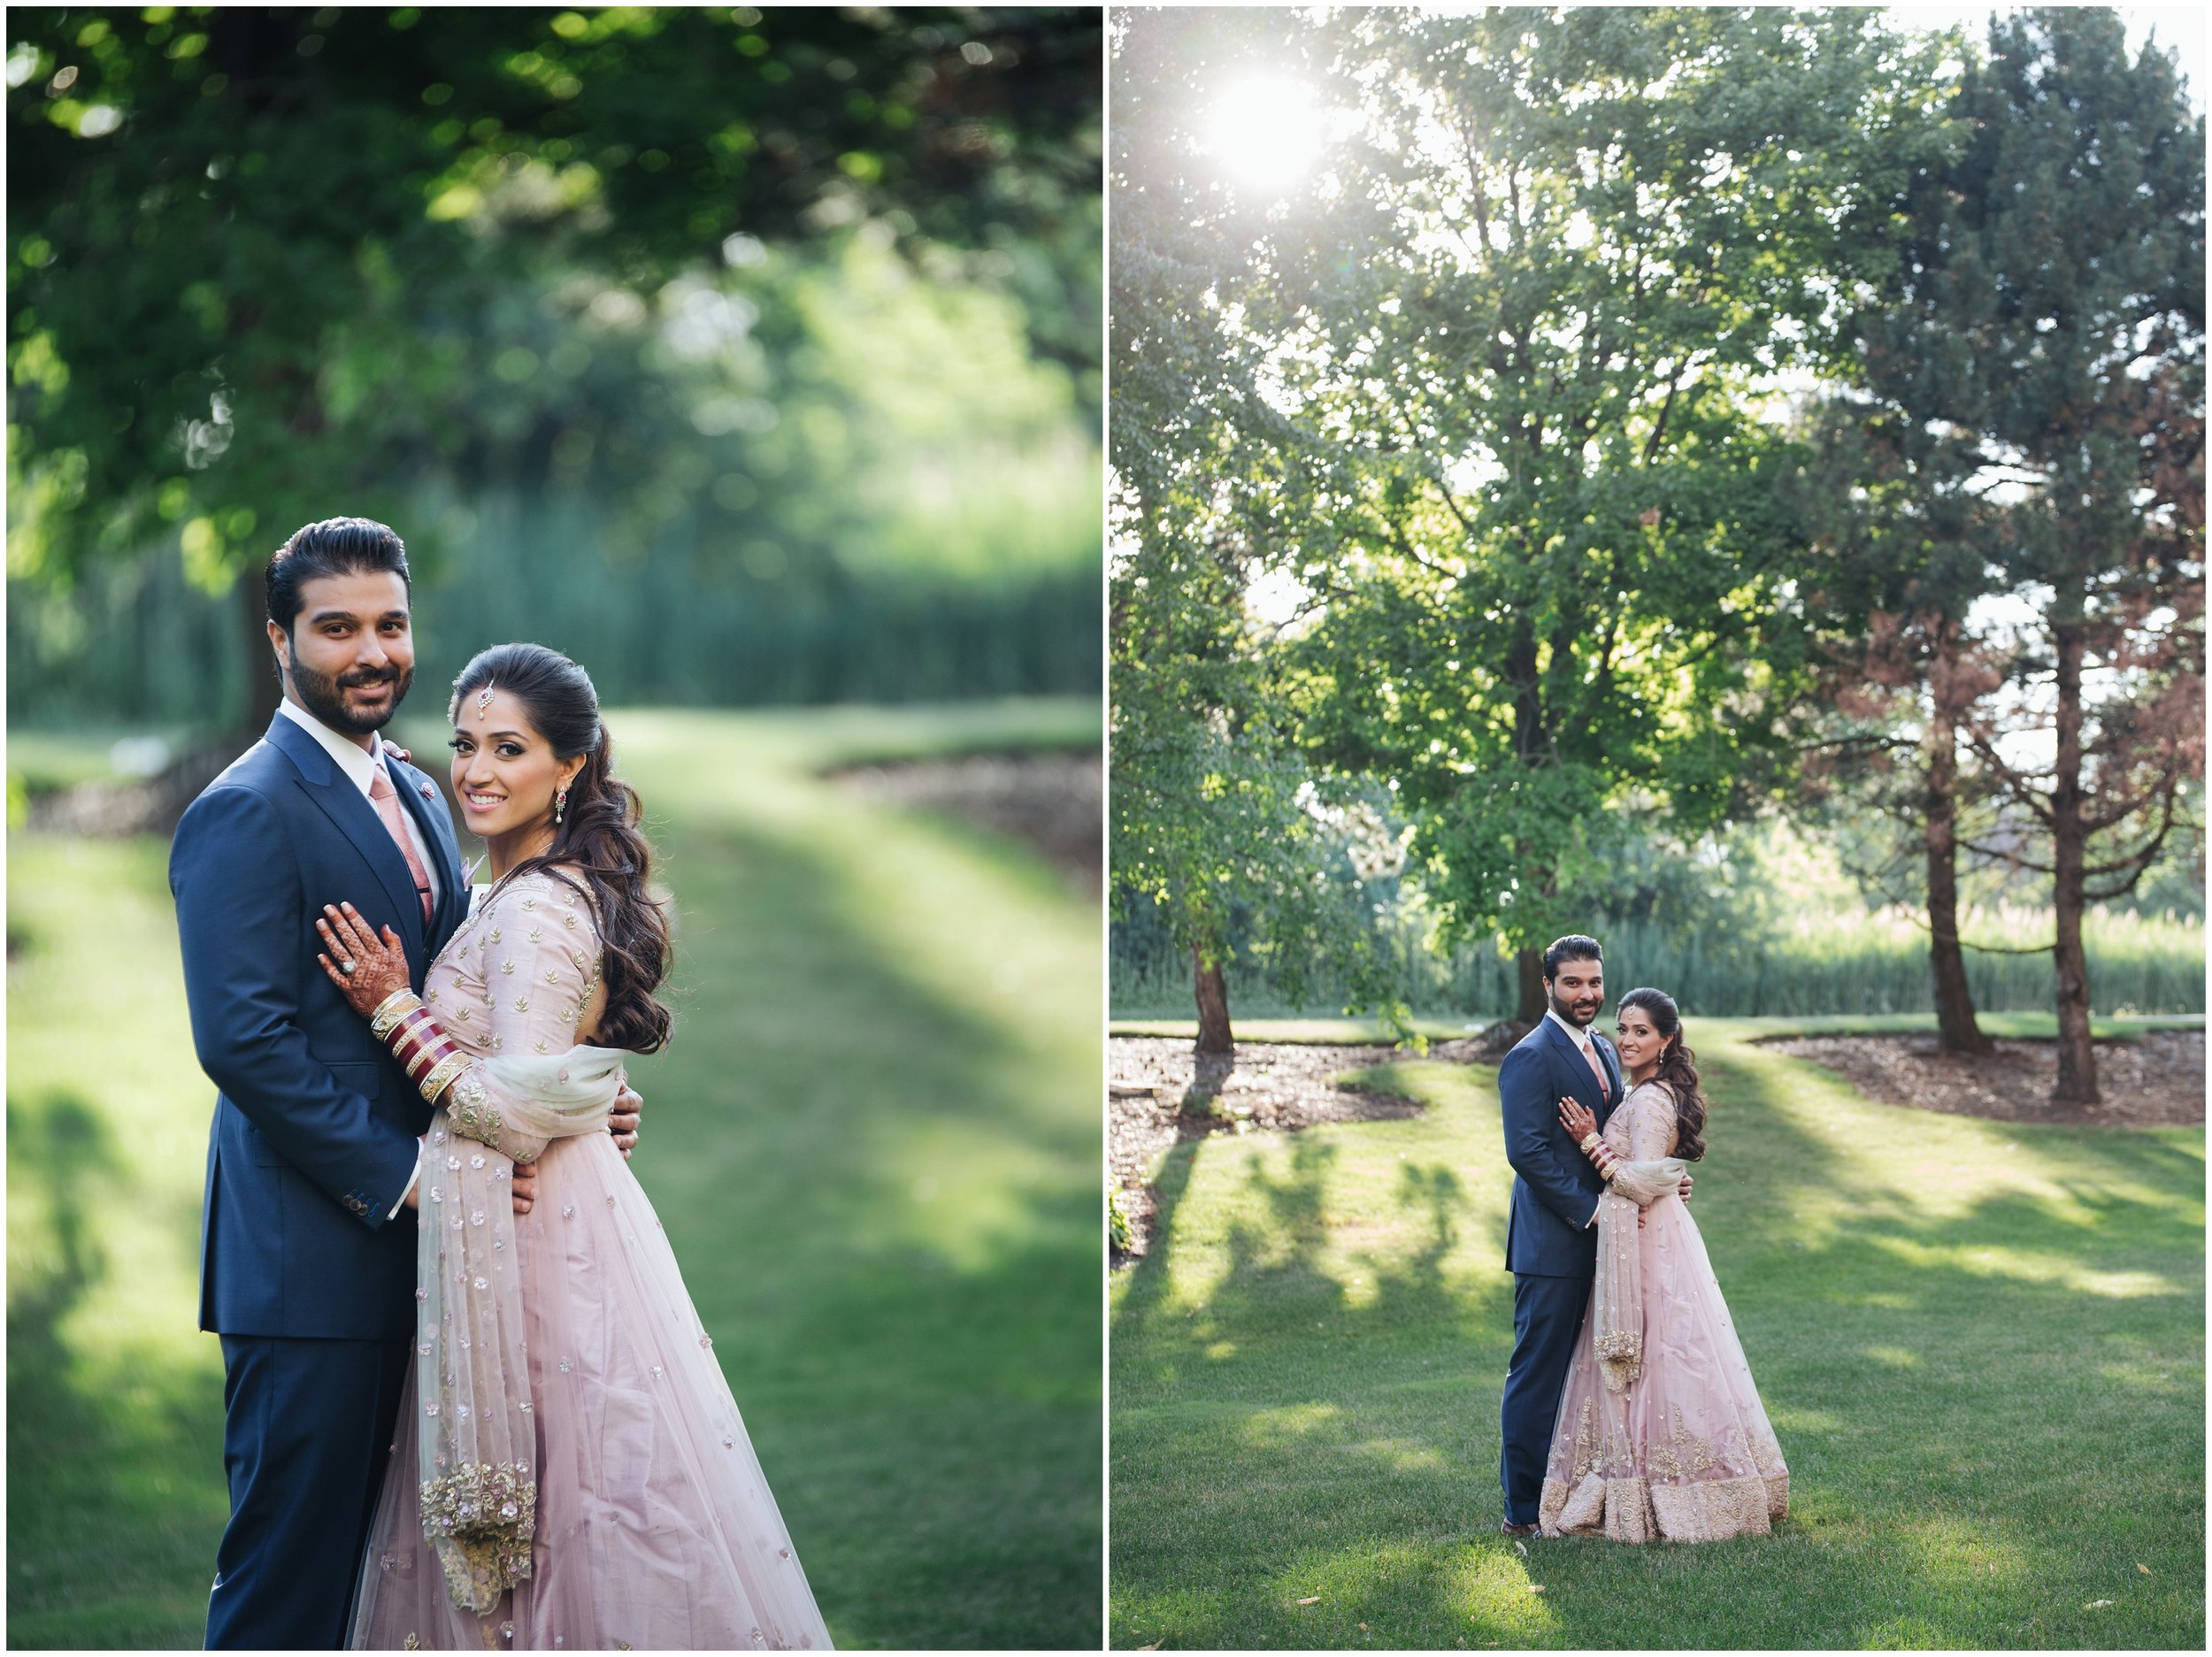 Le Cape Weddings - South Asian Wedding in Illinois - Tanvi and Anshul -1613_LuxuryDestinationPhotographer.jpg